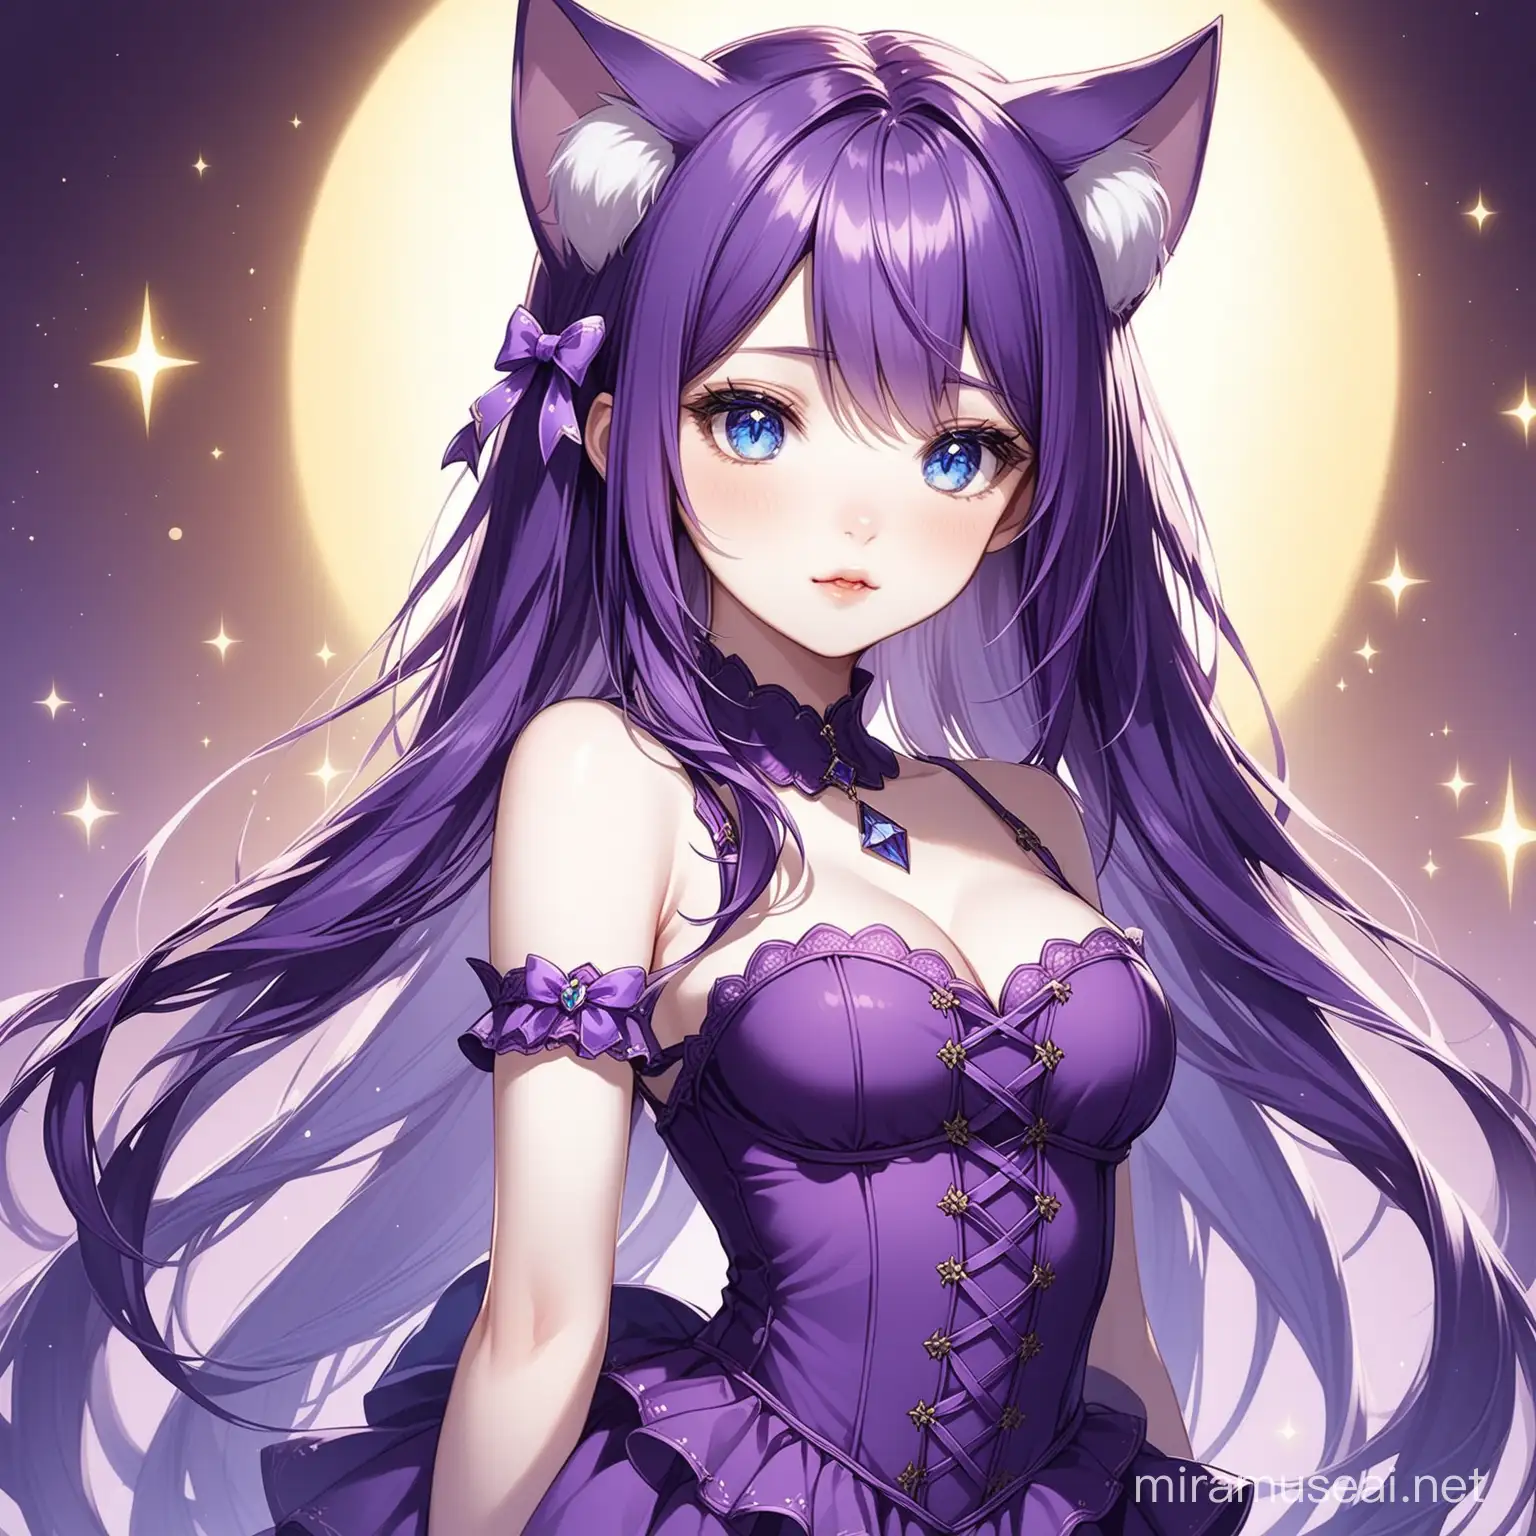 Girl, purple hair with cat ears, purple eyes, cute fantasy purple outfit, blue eyes, pale skin, 